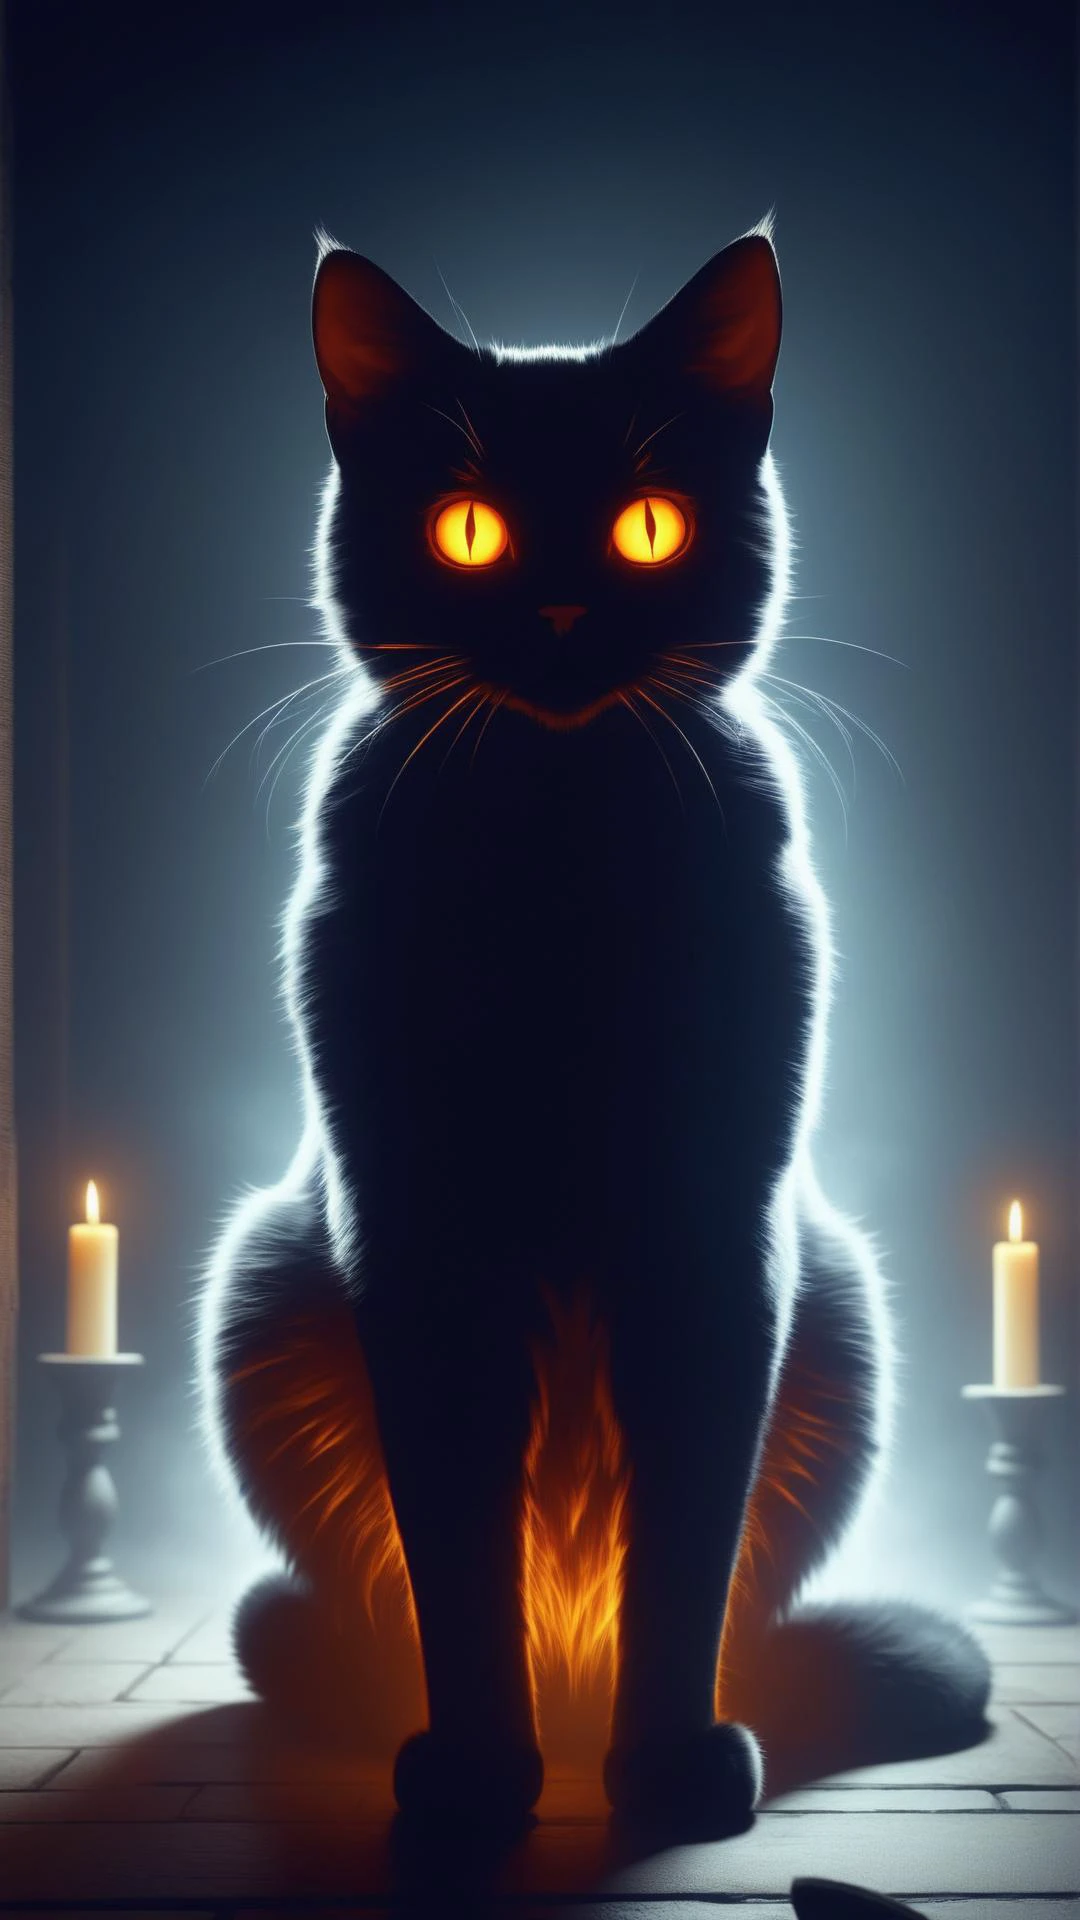 HalloweenGlowStyle cat body, horror \(theme\),  dark, atmospheric, night, glow, (Masterpiece:1.3) (best quality:1.2) (high quality:1.1)